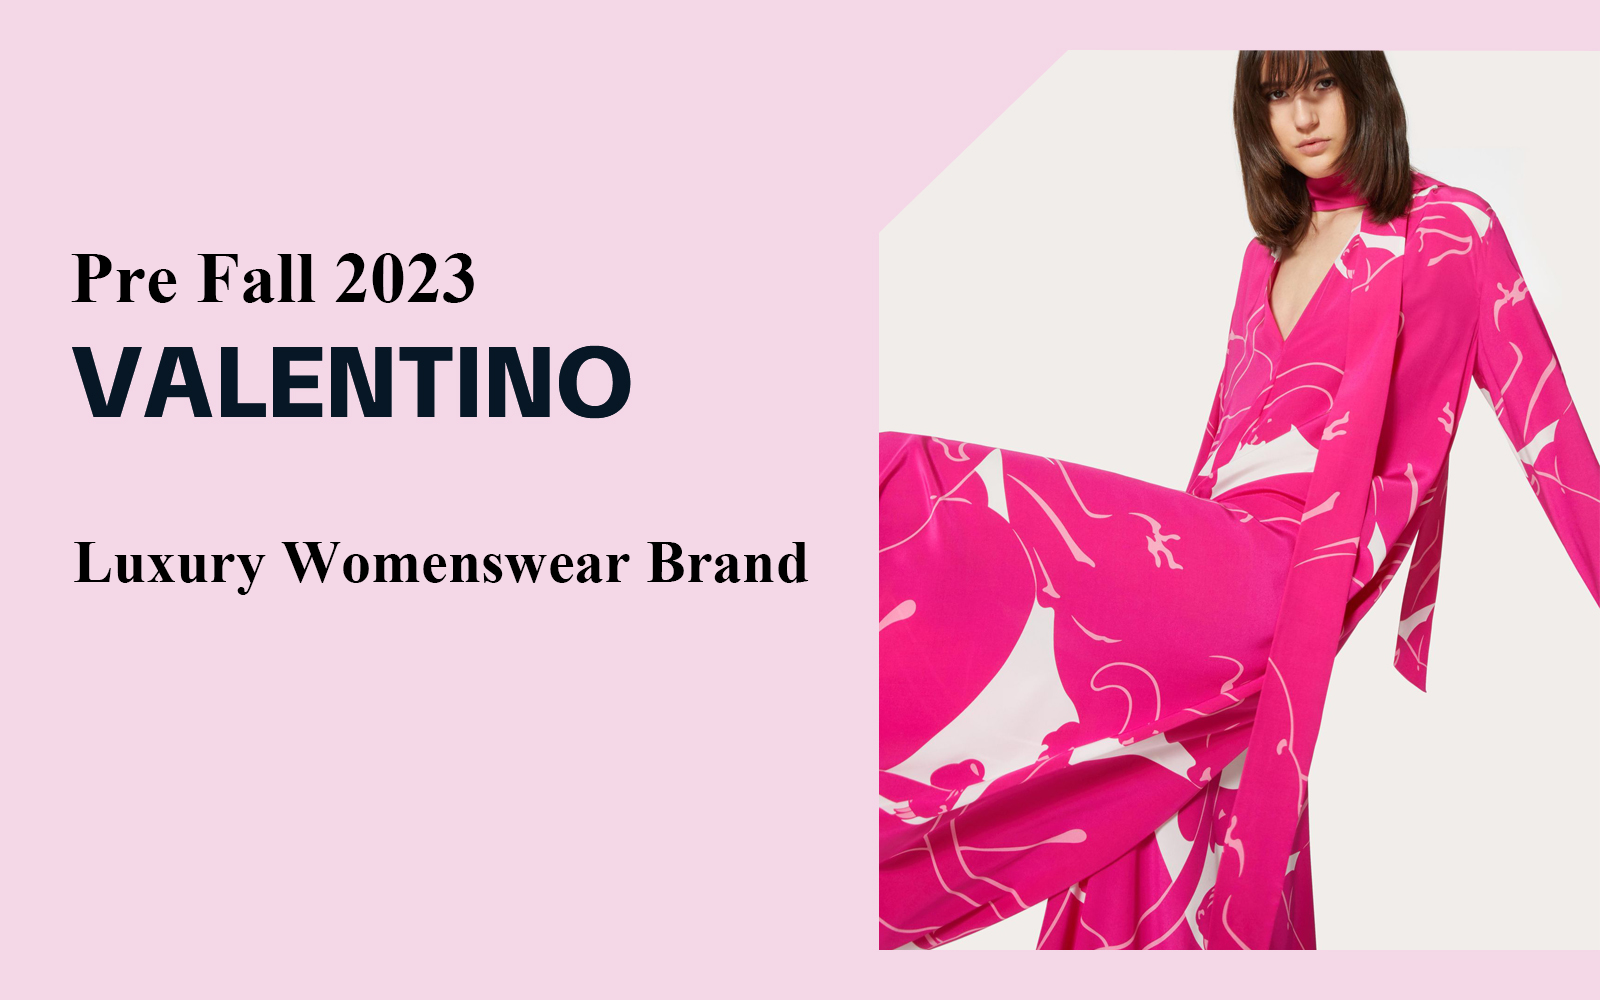 Urban Commute -- The Analysis of Valentino The Luxury Womenswear Brand